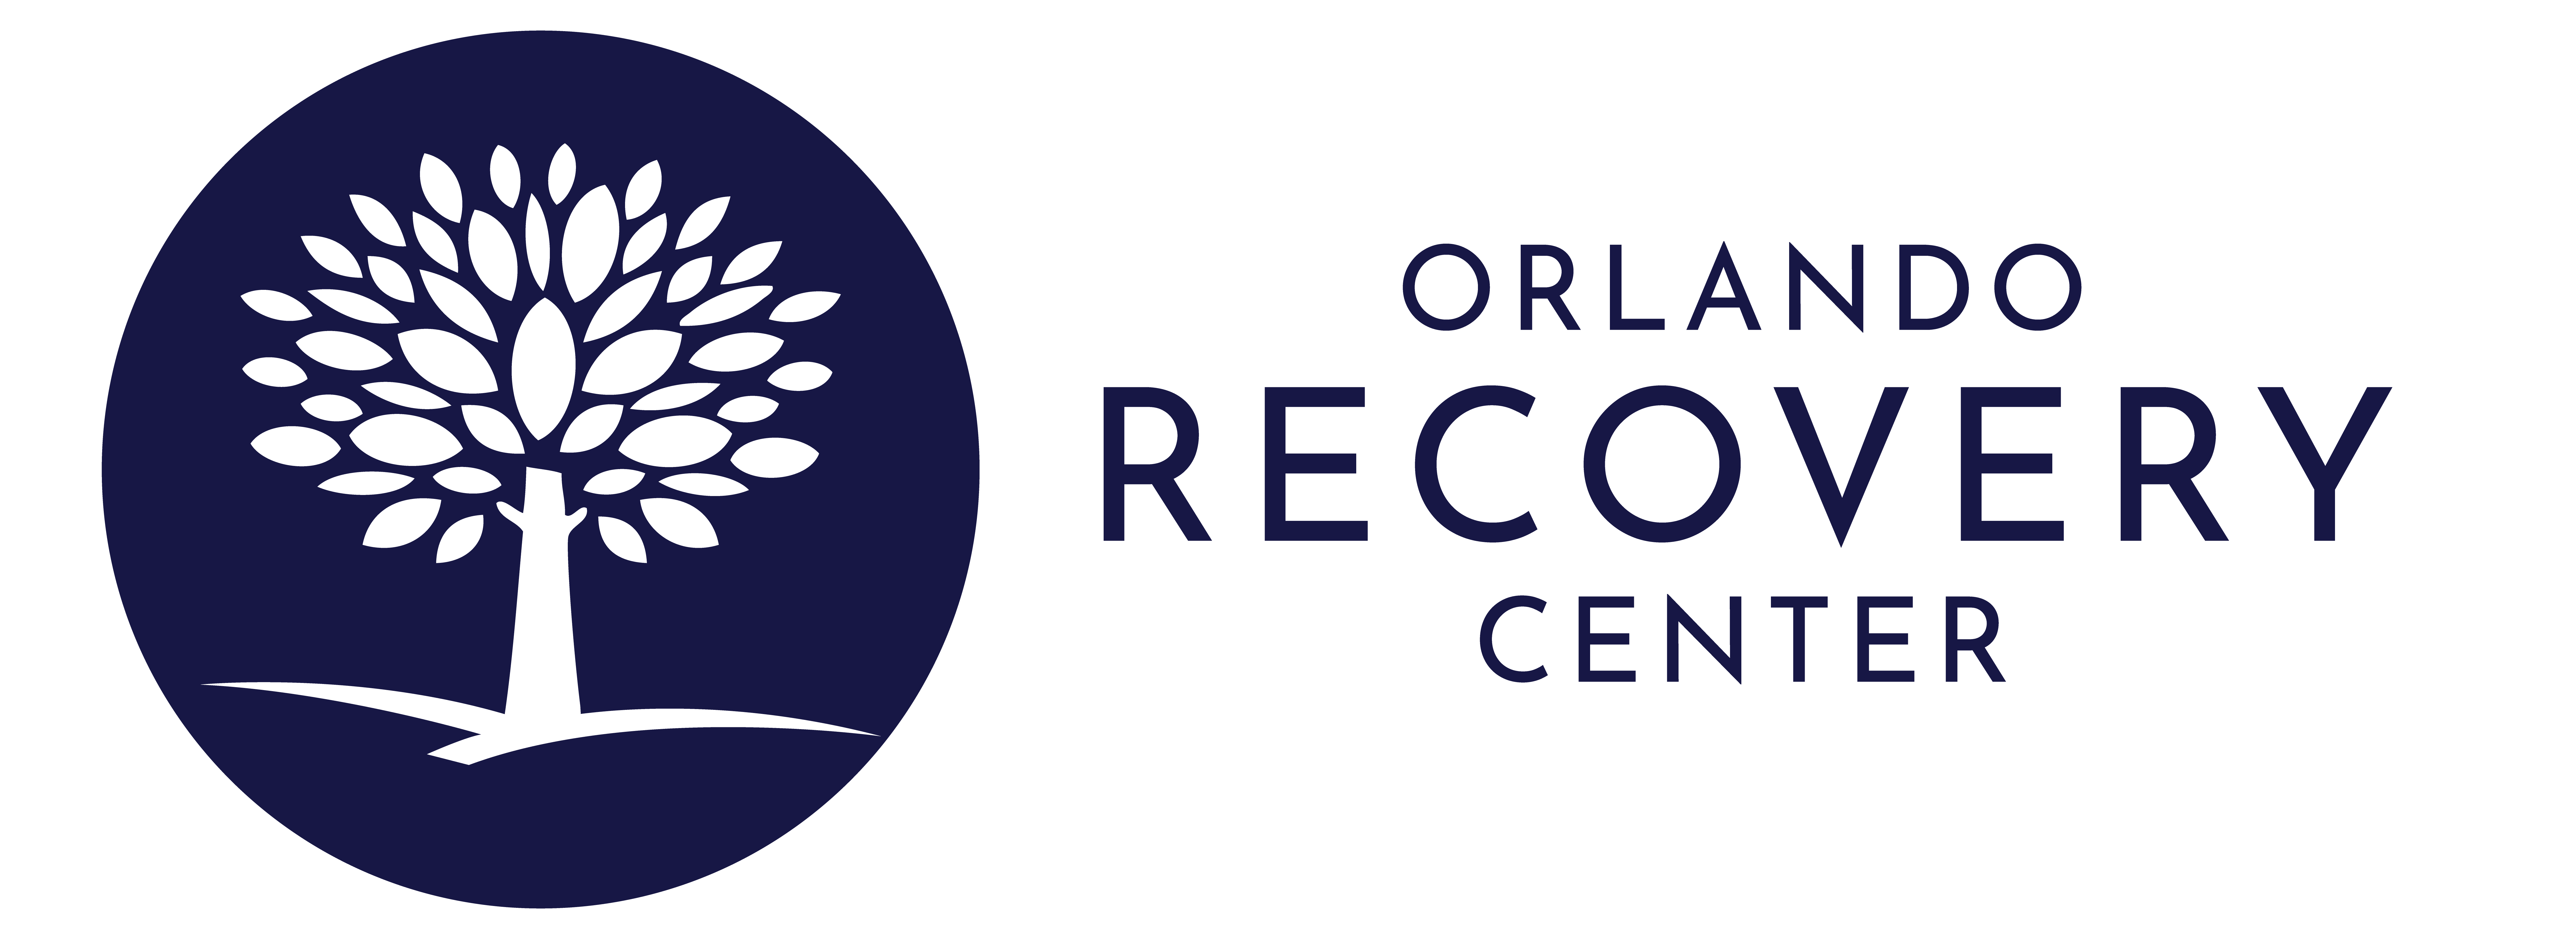 Orlando Recovery